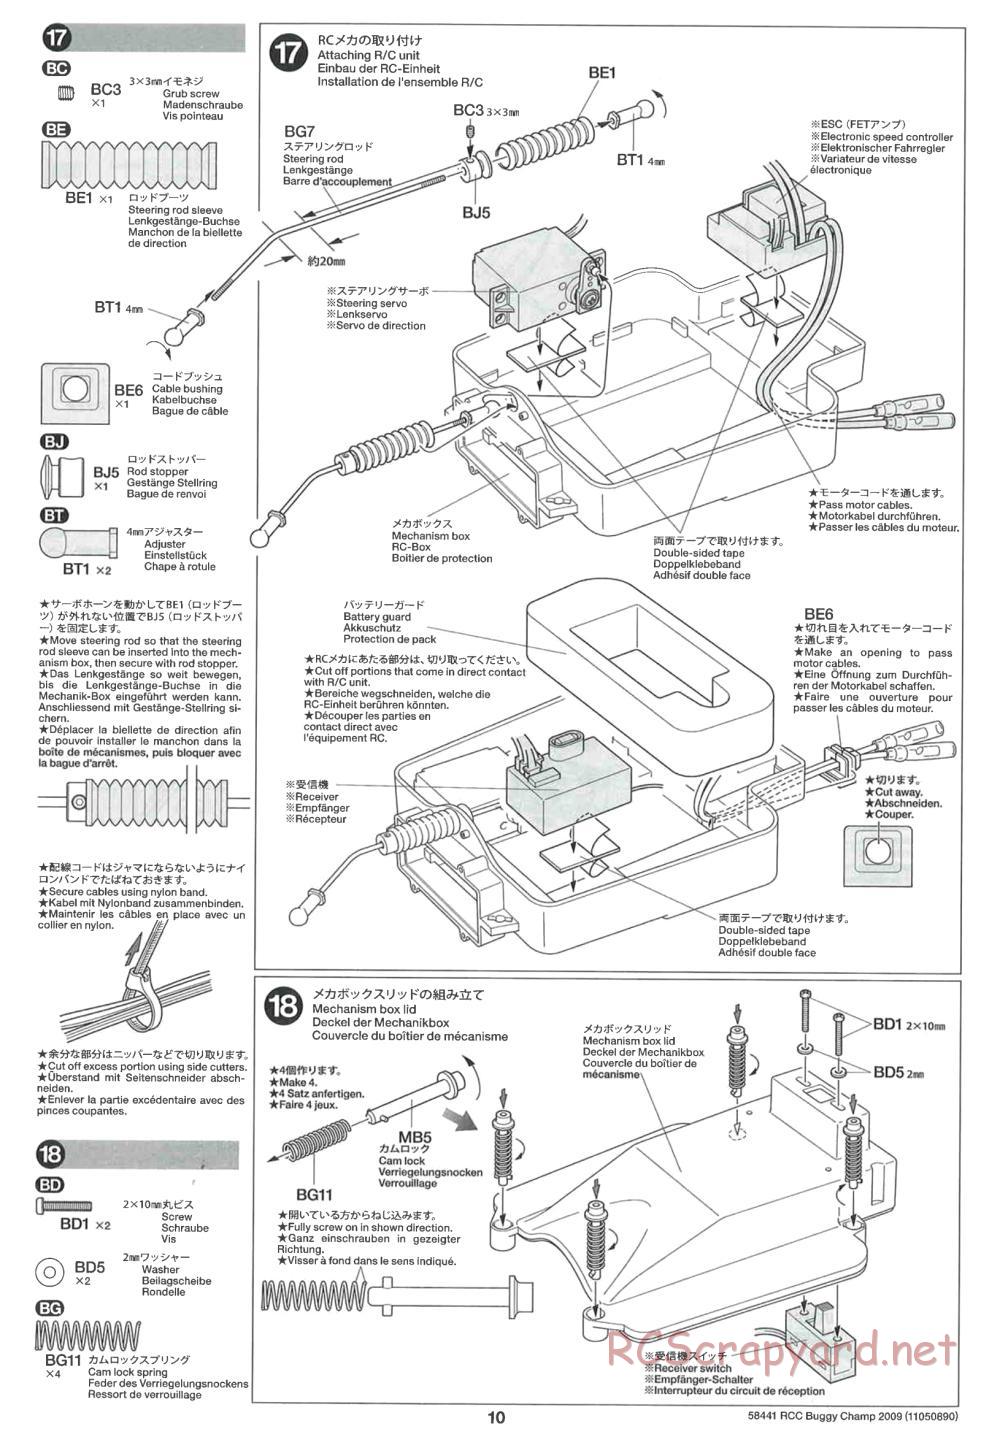 Tamiya - Buggy Champ Chassis - Manual - Page 10